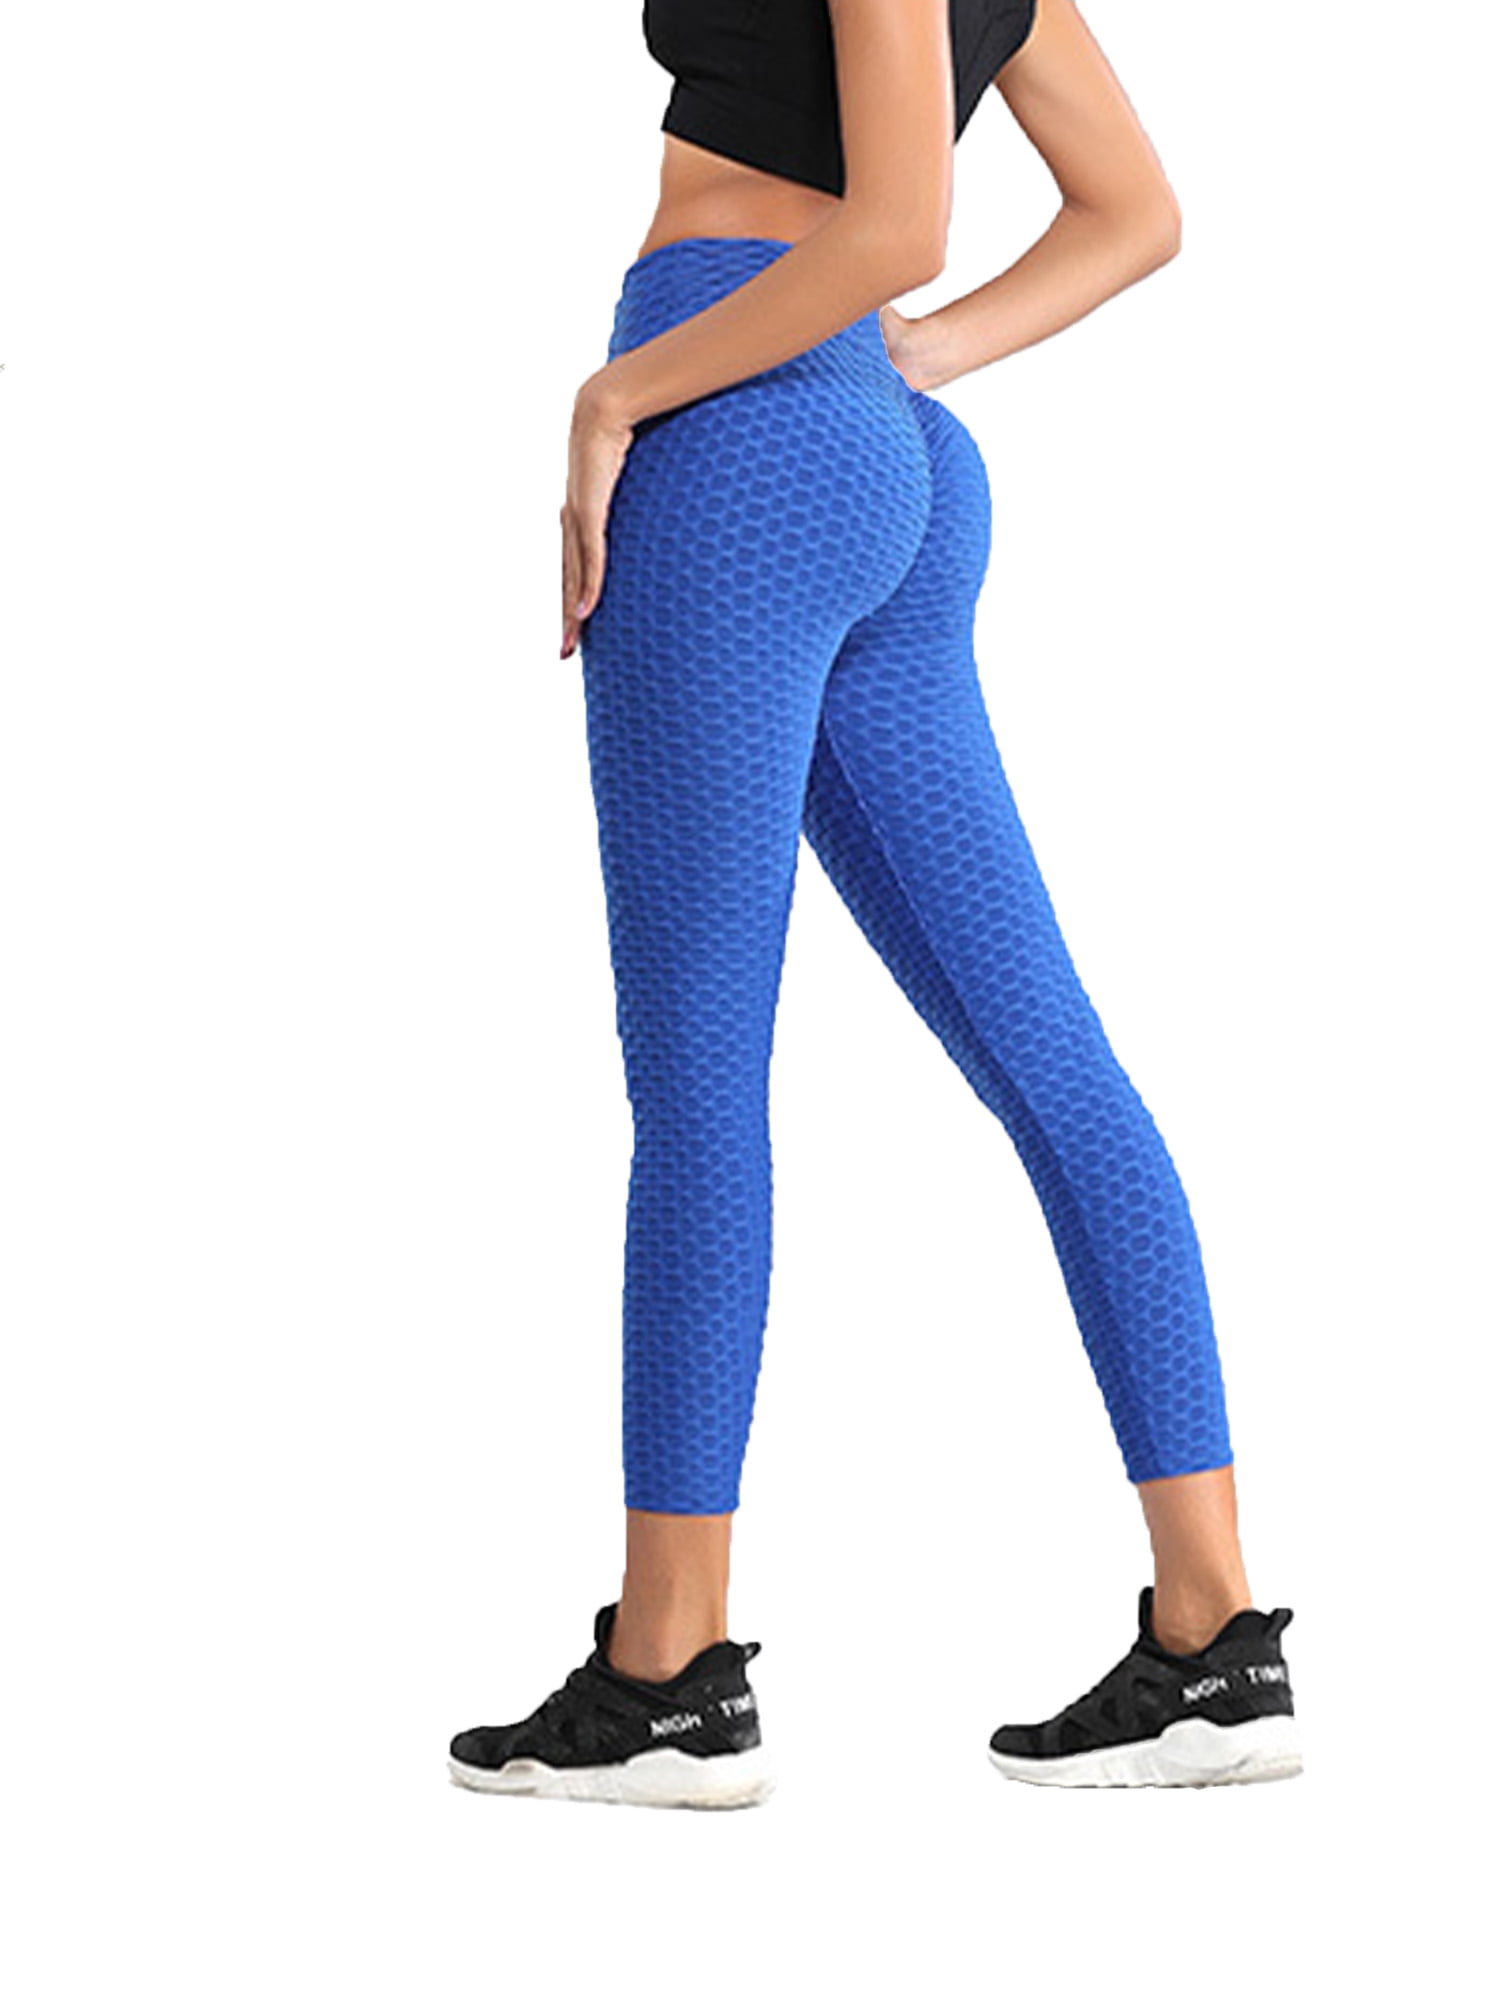 Ladies Yoga Gym Leggings Fitness High Waist Anti Cellulite Pants Sports Trousers 